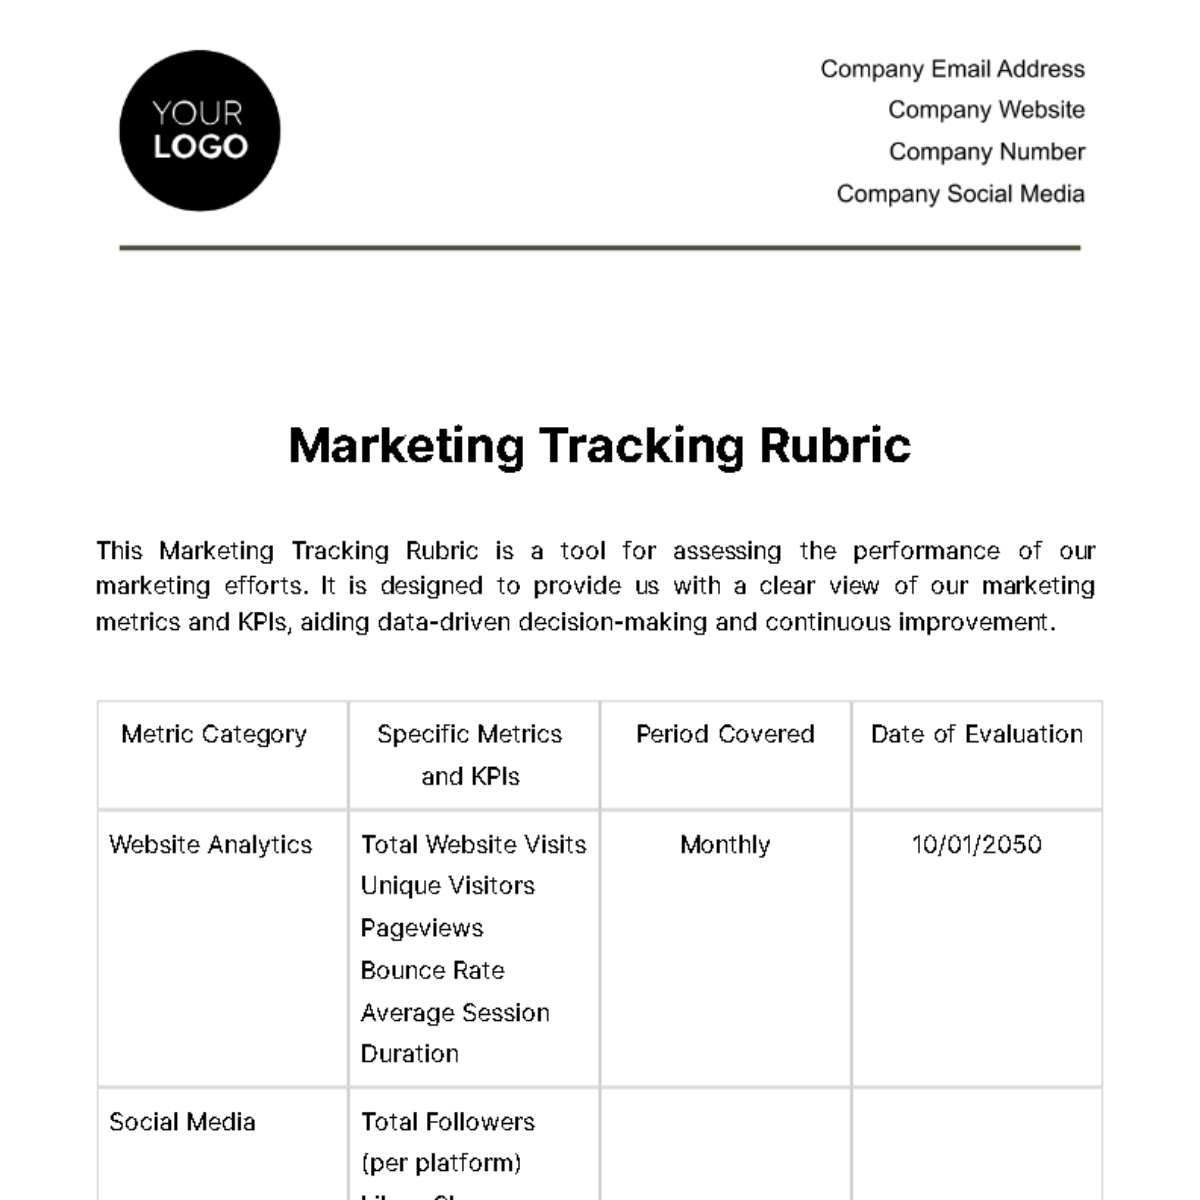 Marketing Tracking Rubric Template